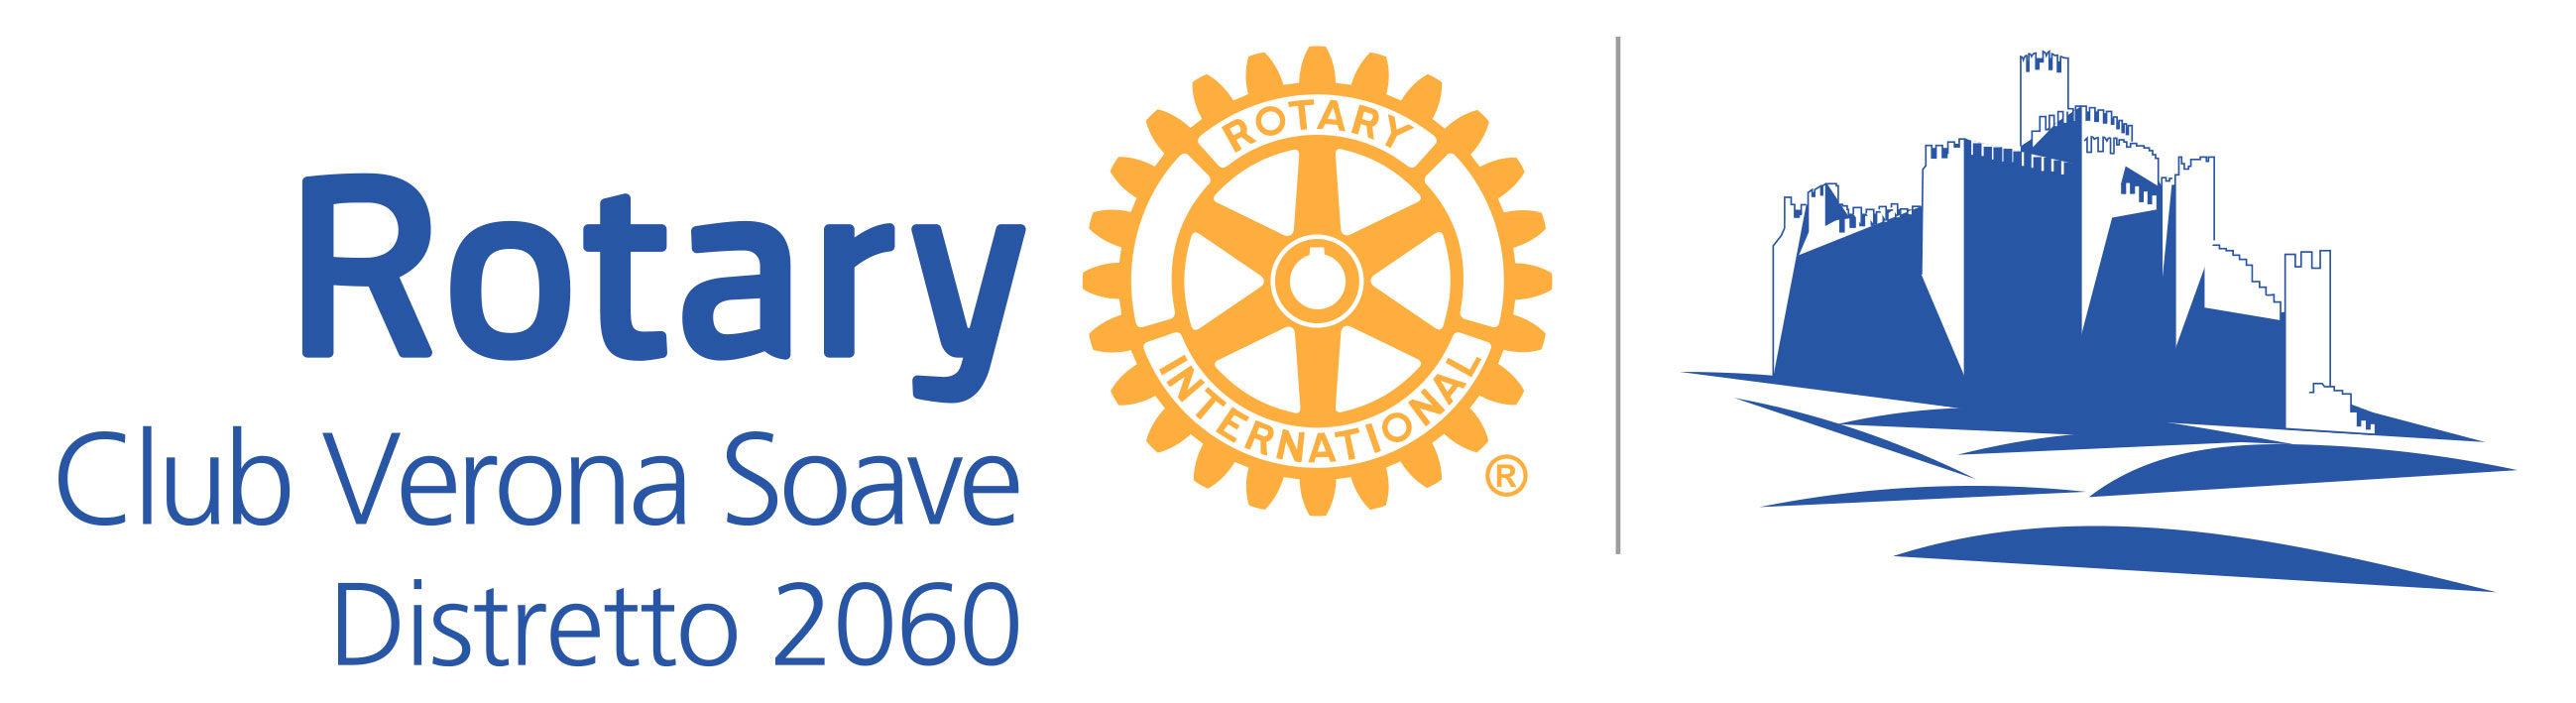 Rotary Club Verona Soave